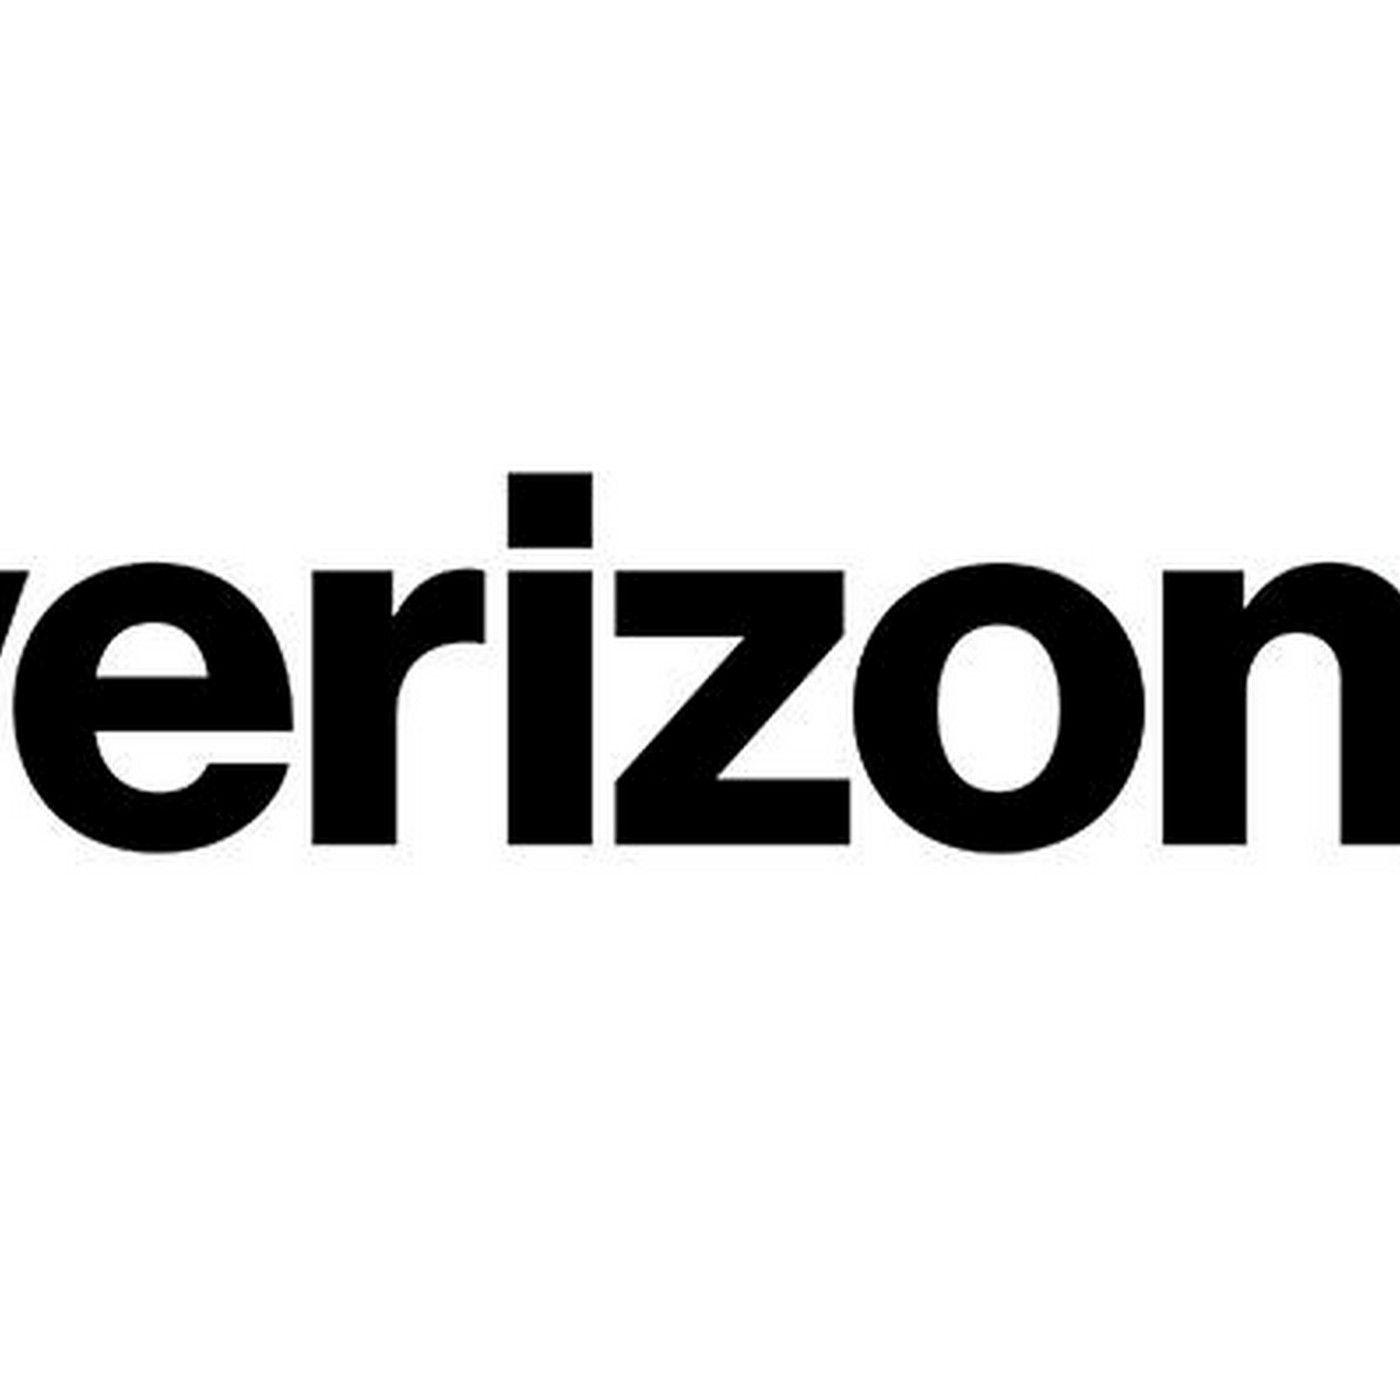 Verizon Logo - Verizon just unveiled a new logo